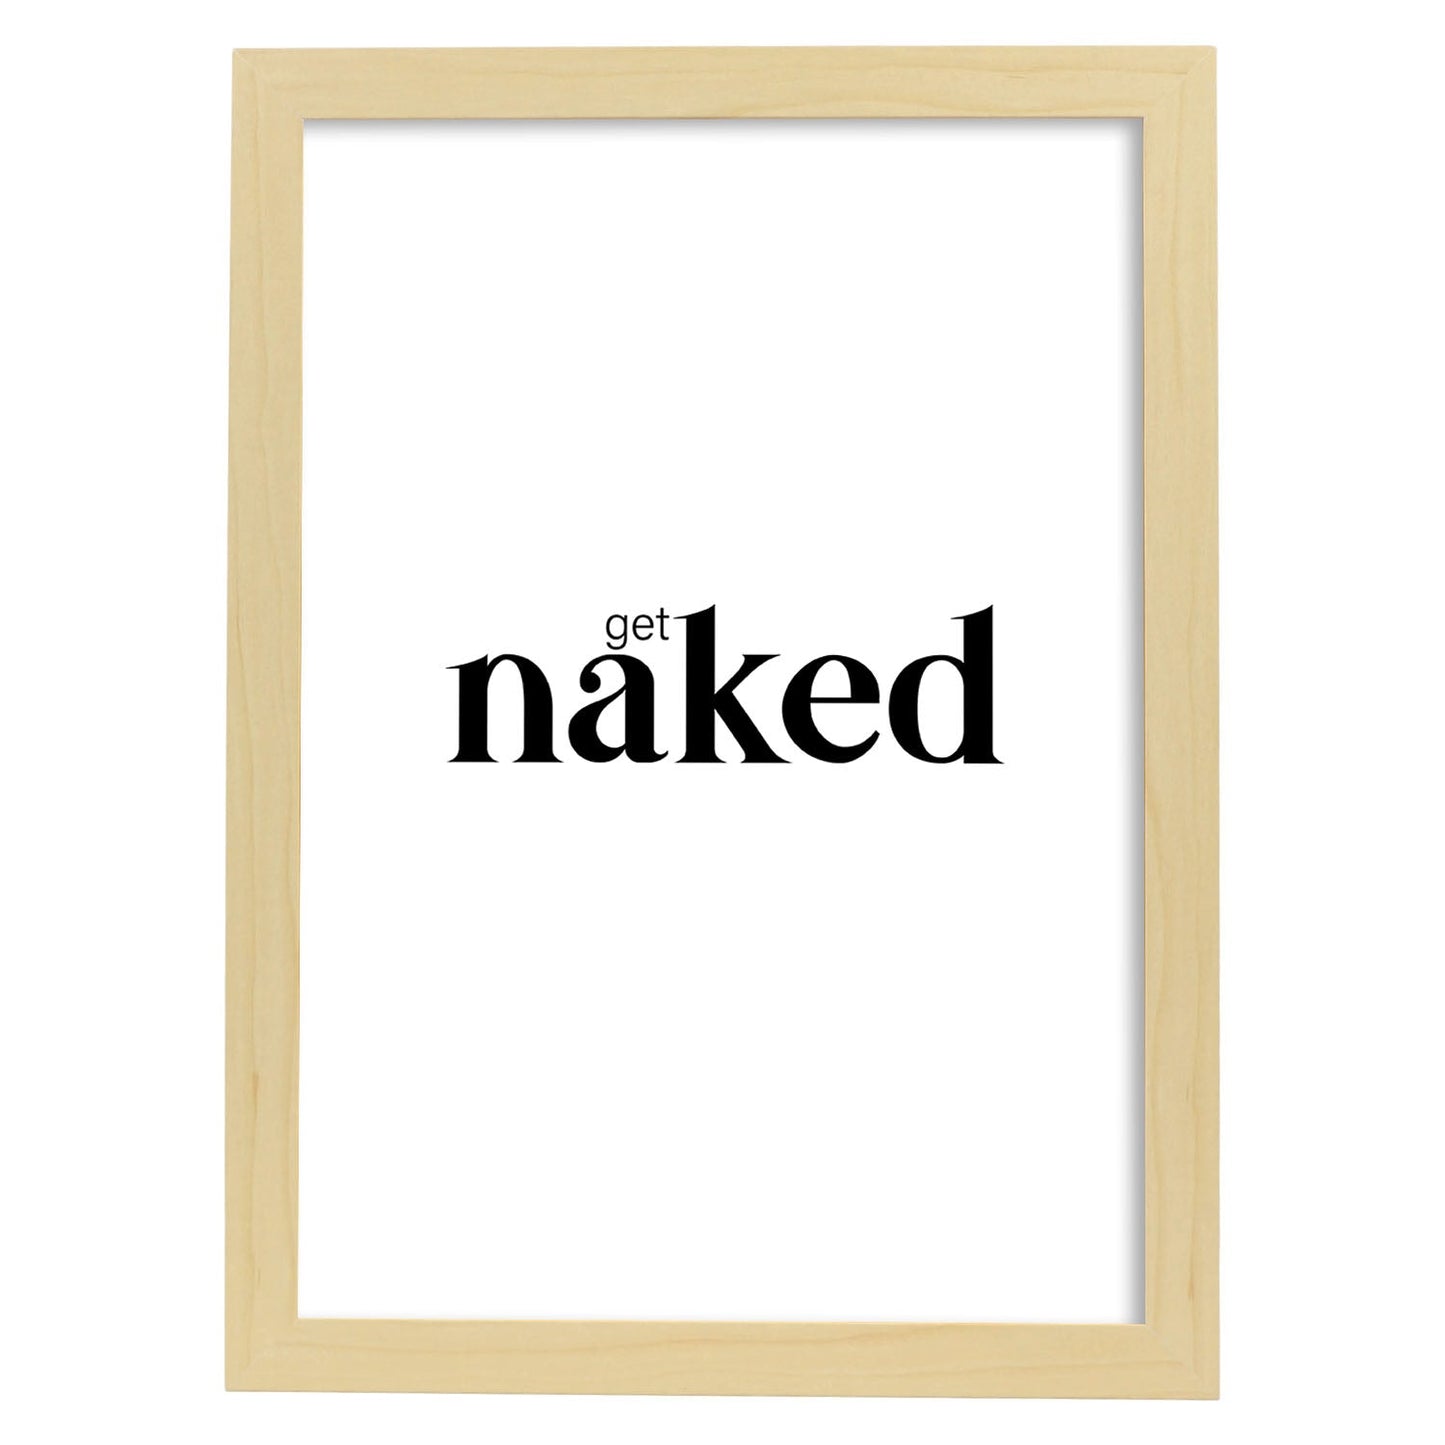 Lamina artistica decorativa con ilustración de get naked estilo Mensaje inspiracional-Artwork-Nacnic-A4-Marco Madera clara-Nacnic Estudio SL